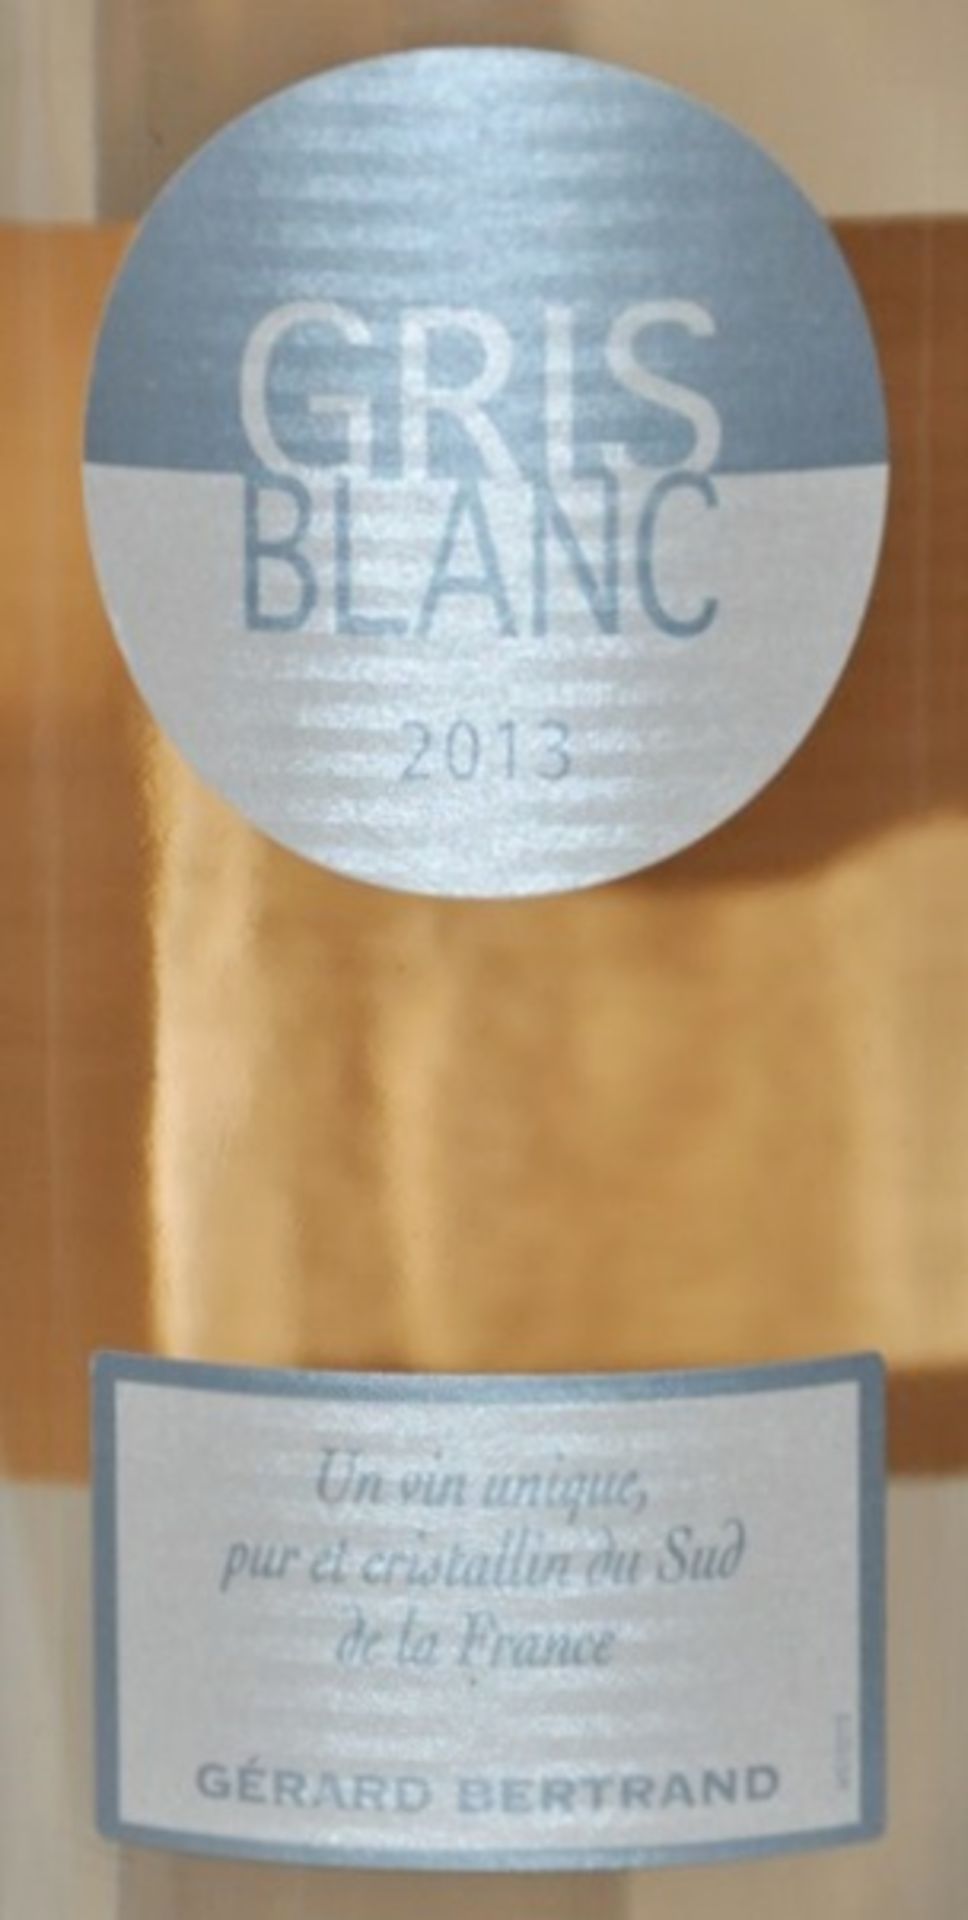 3 x 2013 Gerard Bertrand Gris Blanc, IGP Pays d'Oc, France – 2013 – Bottle Size 75cl - Volume - Image 3 of 4